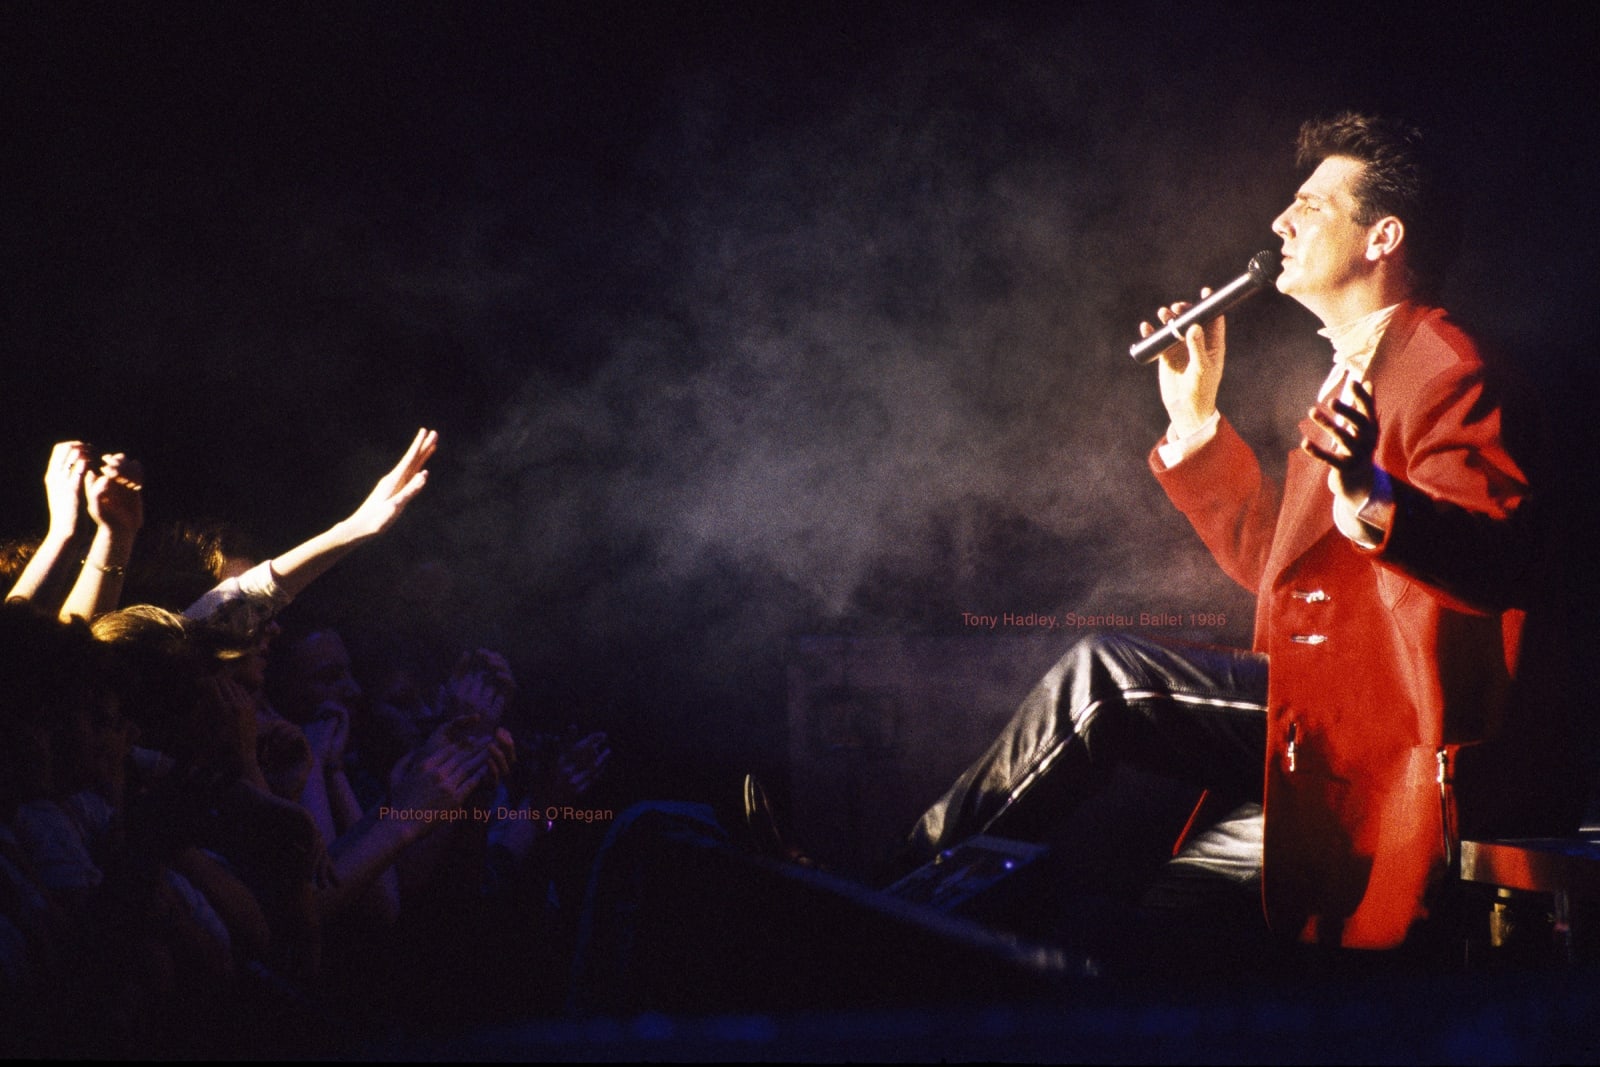 SPANDAU BALLET, Tony Hadley on stage, 1986